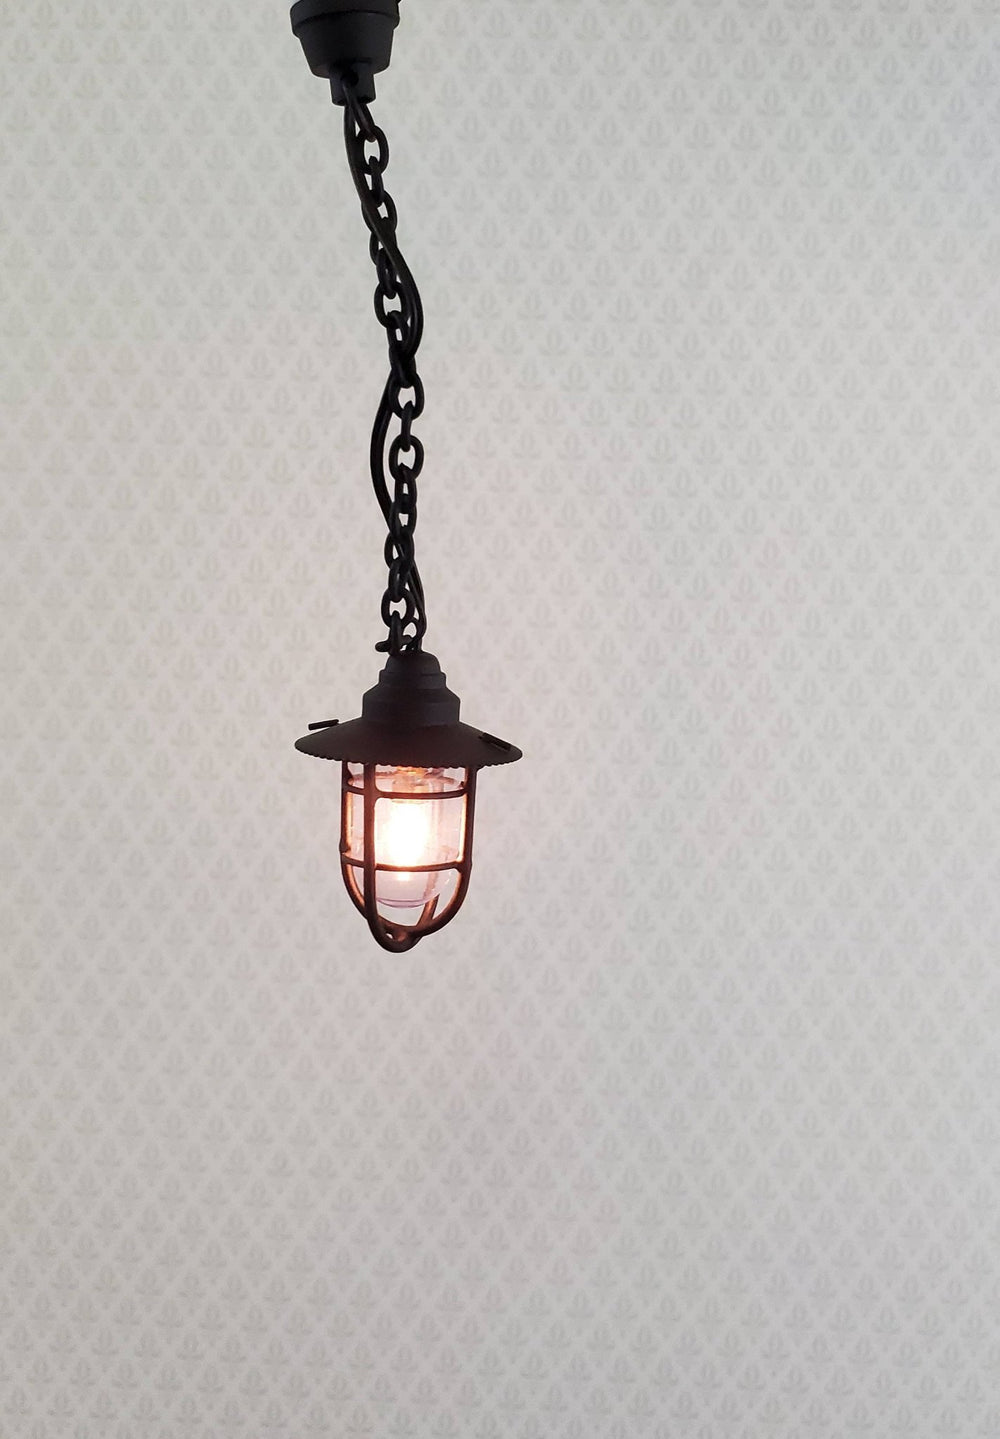 Dollhouse Miniature Hanging Lantern Light Black Vintage Style 12 Volt 1:12 Scale Lighting - Miniature Crush